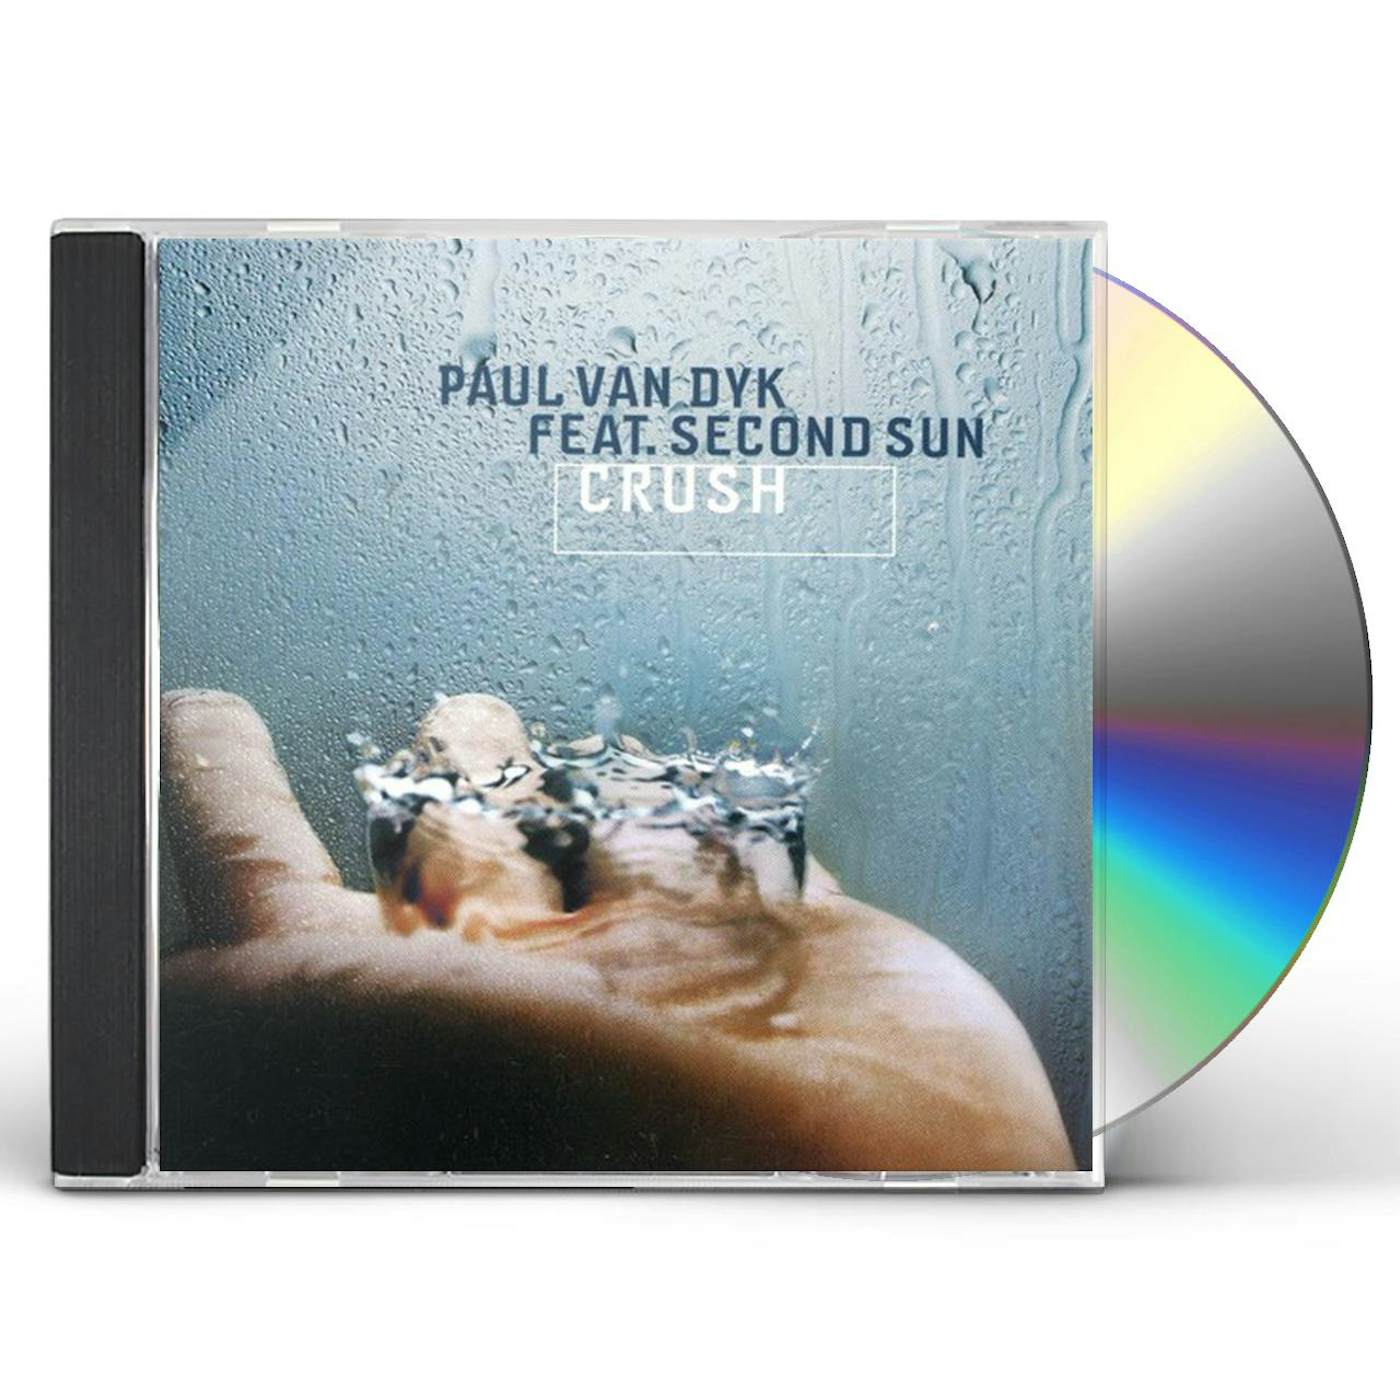 Paul van Dyk CRUSH (X5) CD